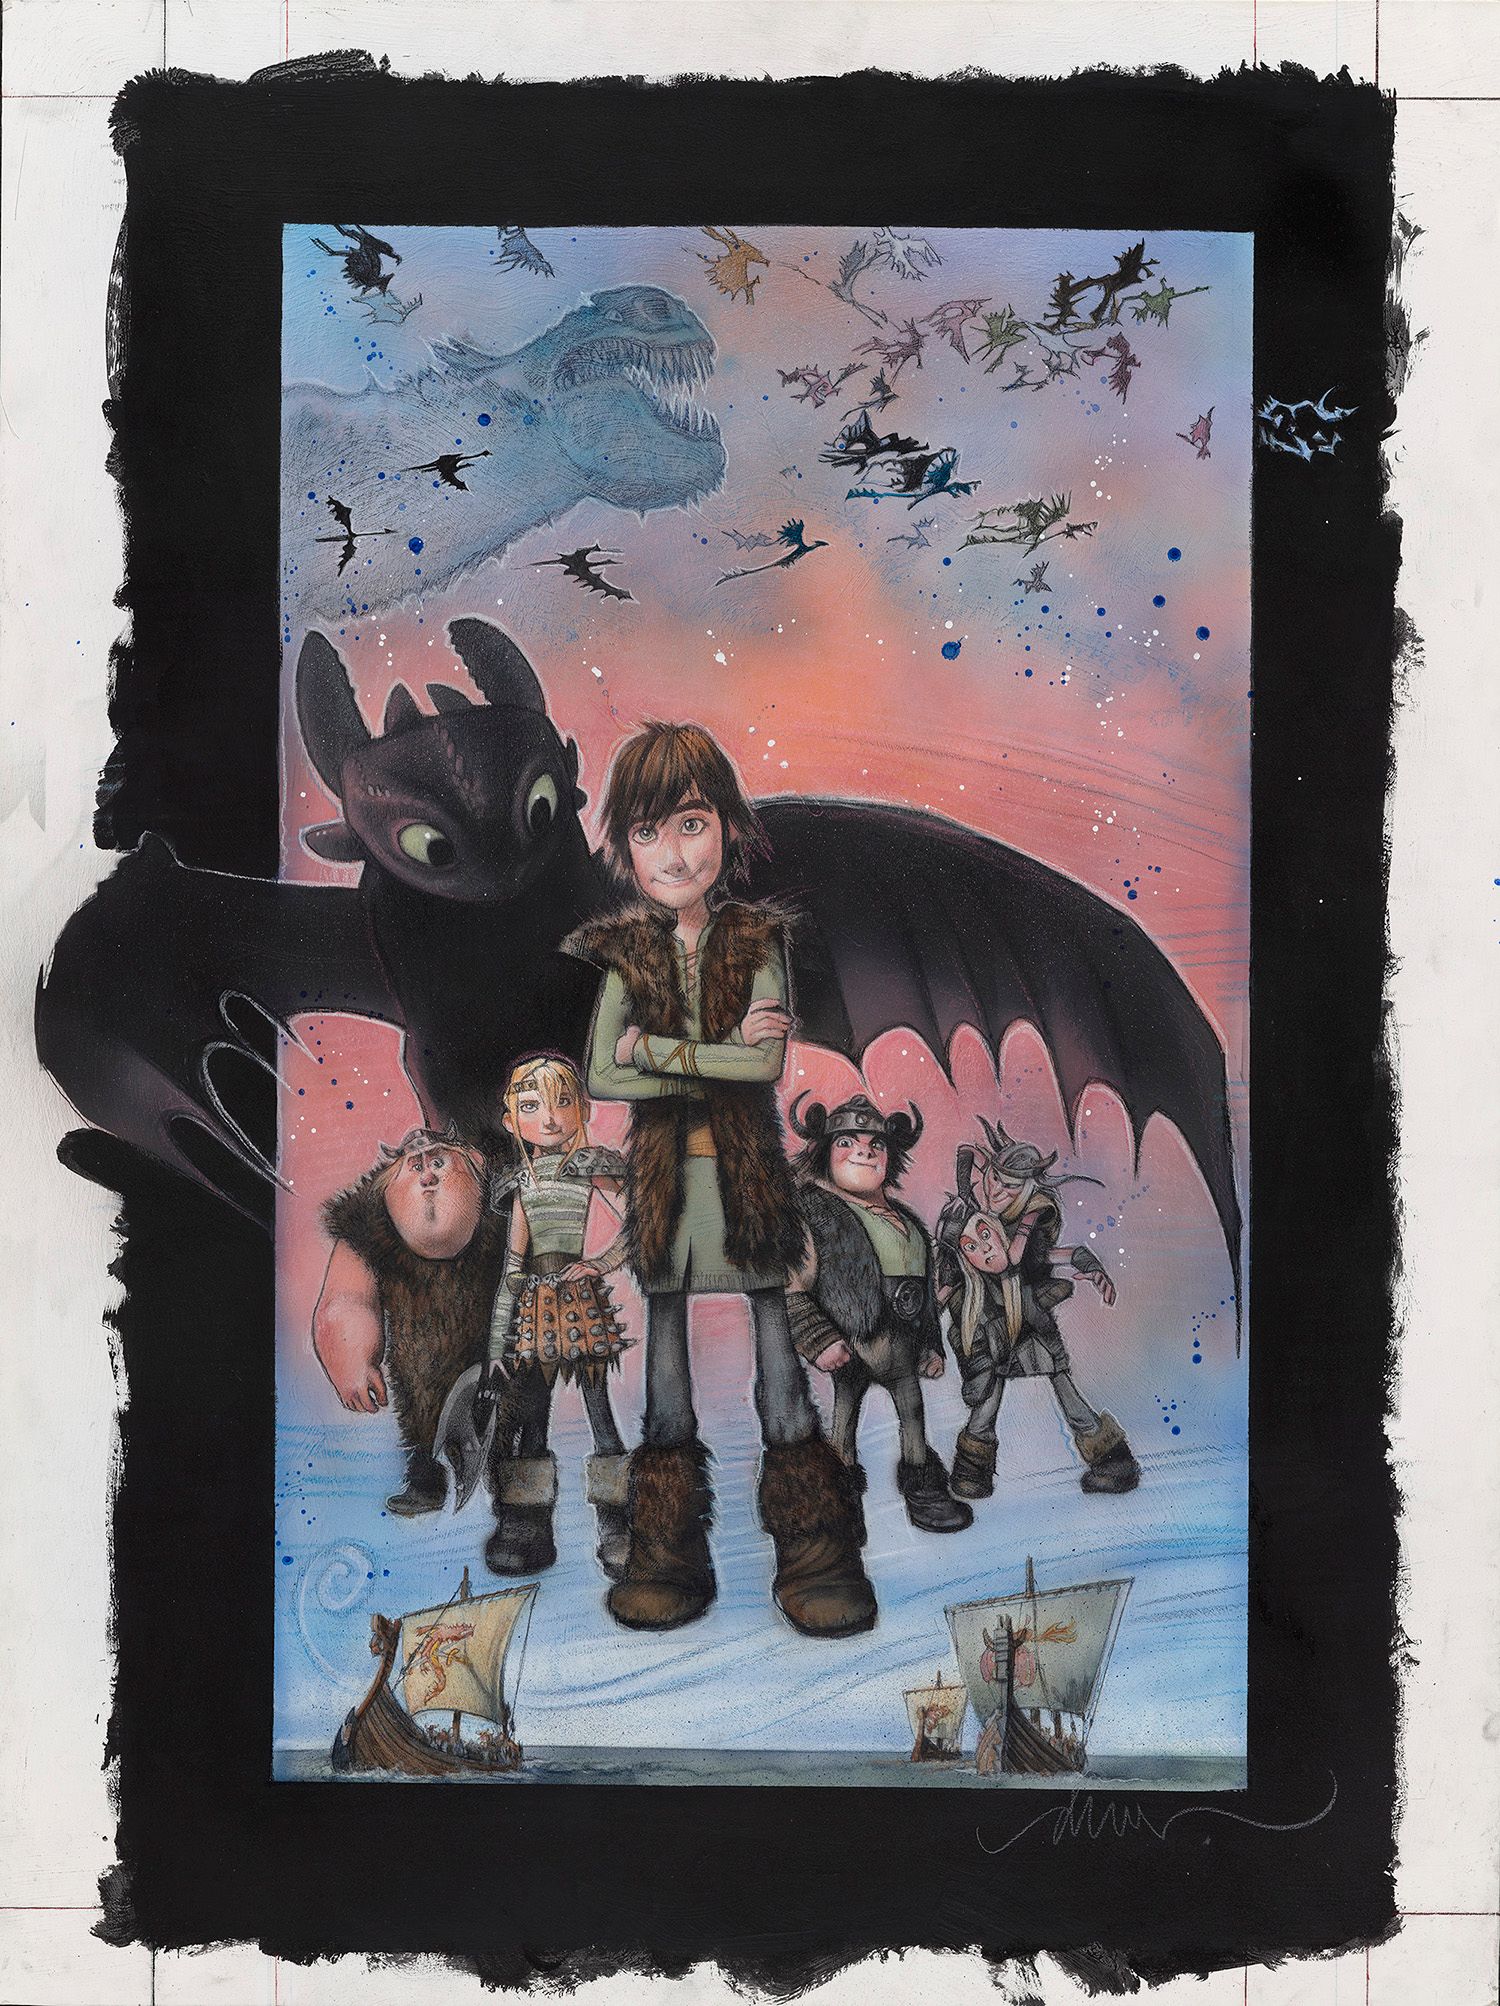 How to Train Your Dragon: Legendary Artist Drew Struzan Creates New Posters for Trilogy